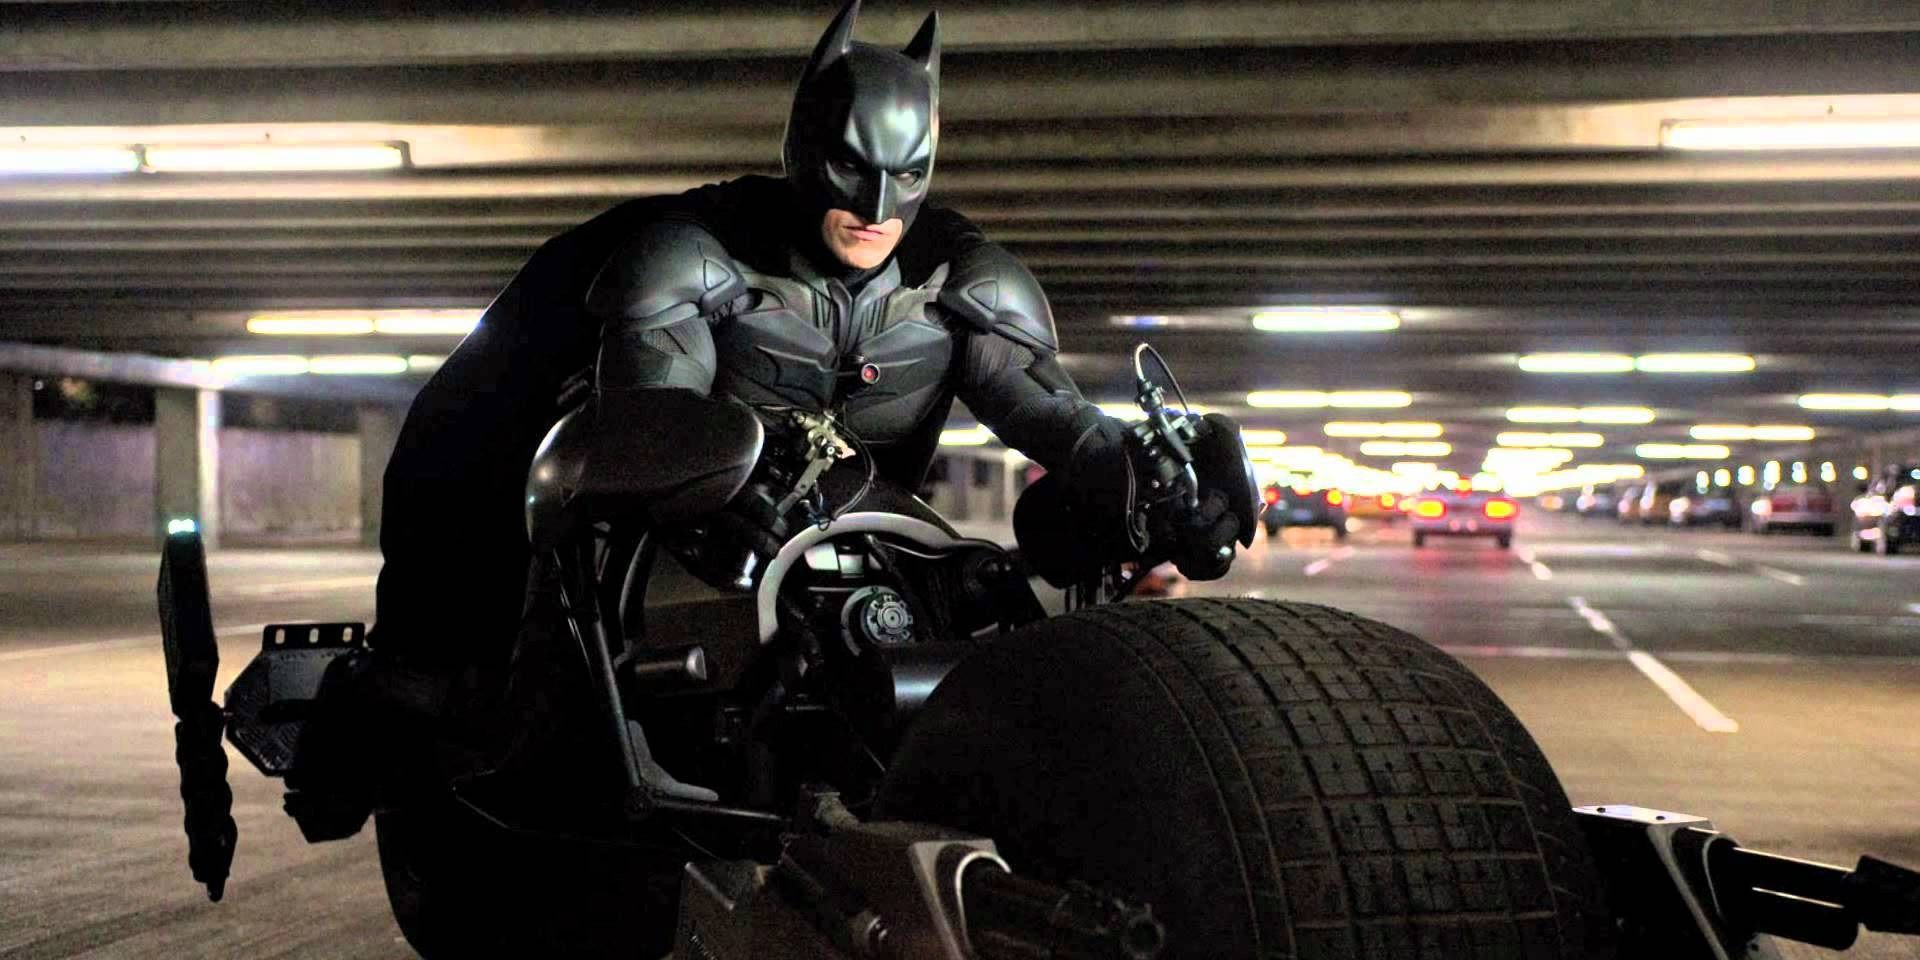 Christian Bale as Batman on the Batpod